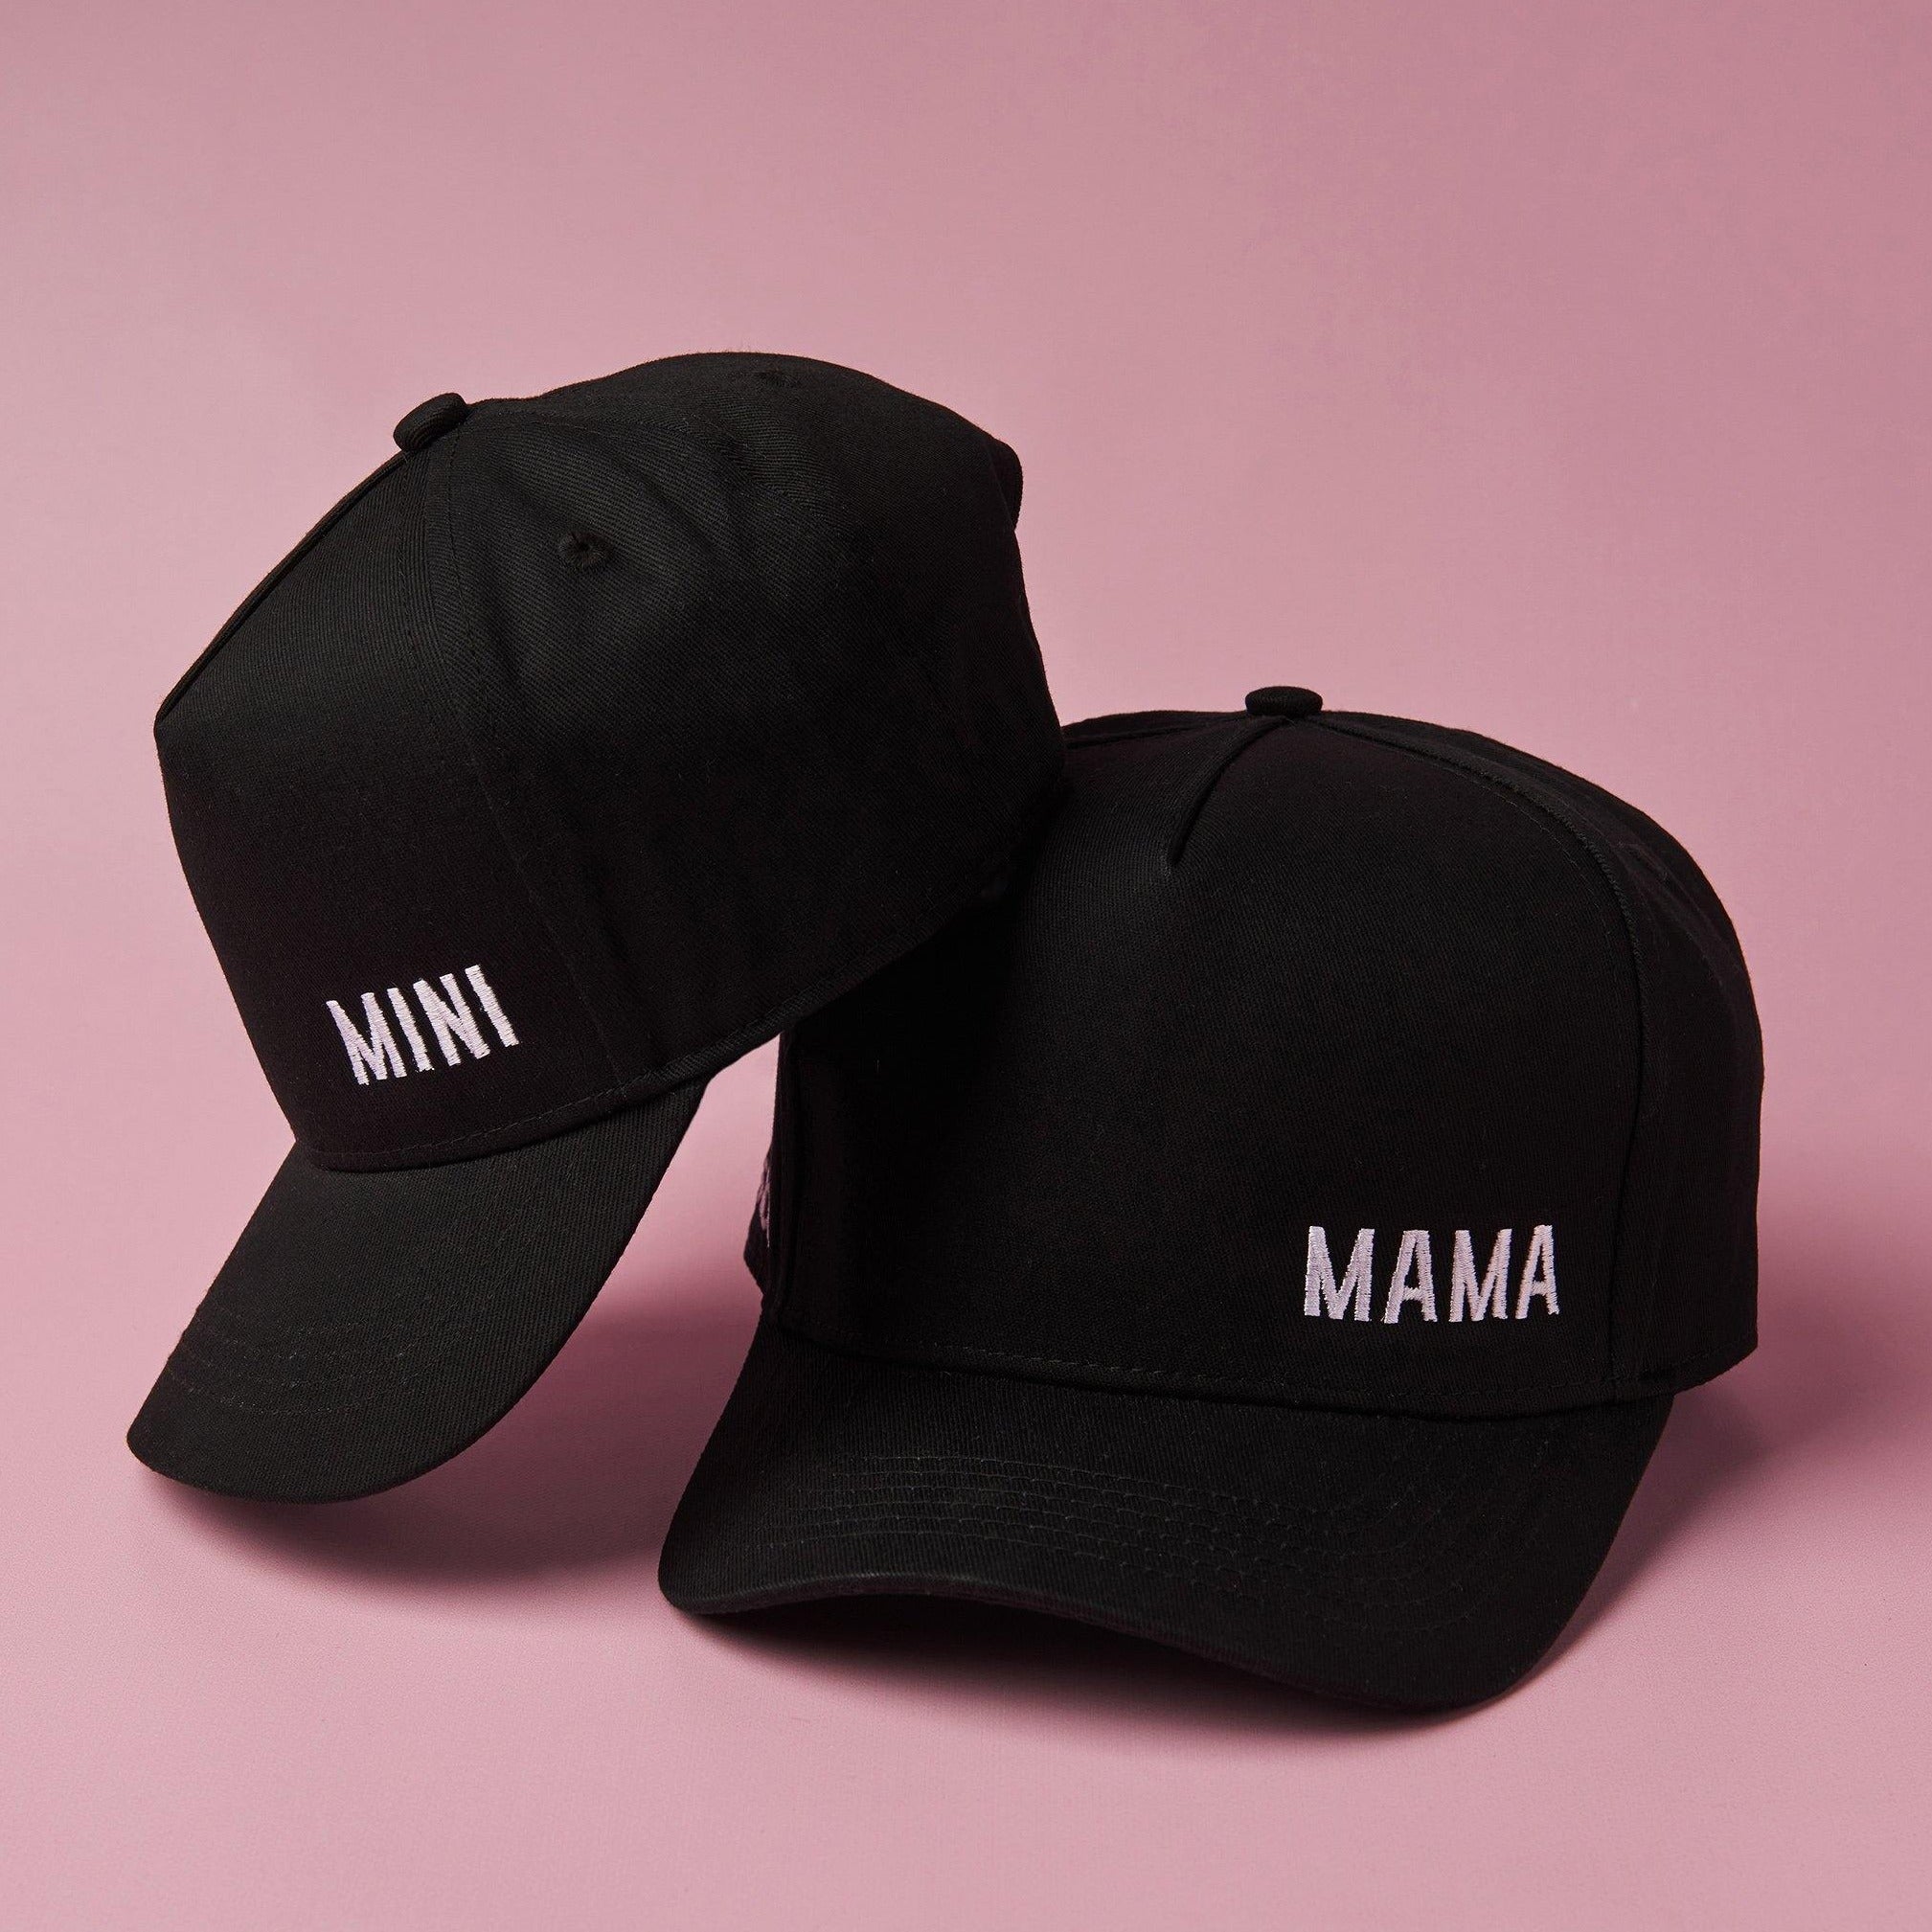 Mum and Mini black baseball caps, Matching for mum and kids. Cubs & Co. Australia